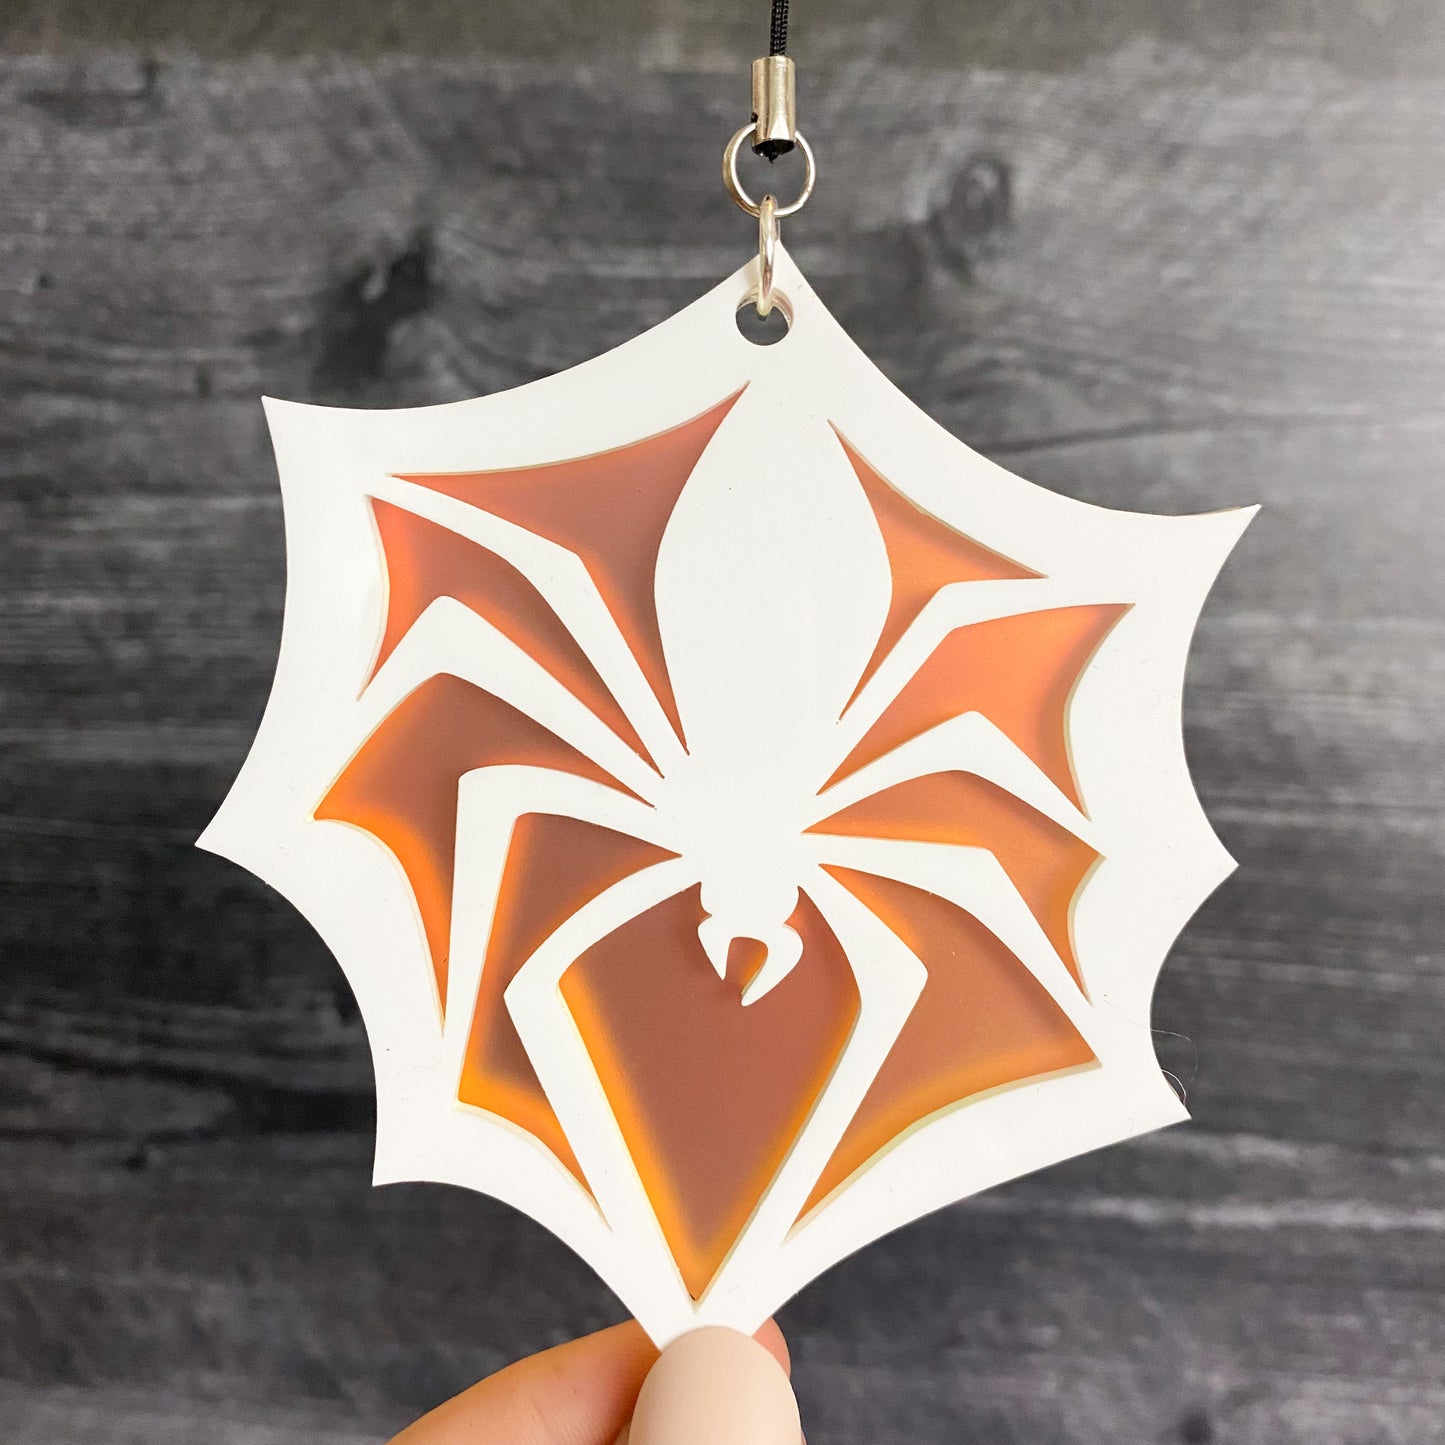 Spider Snowflake Ornament